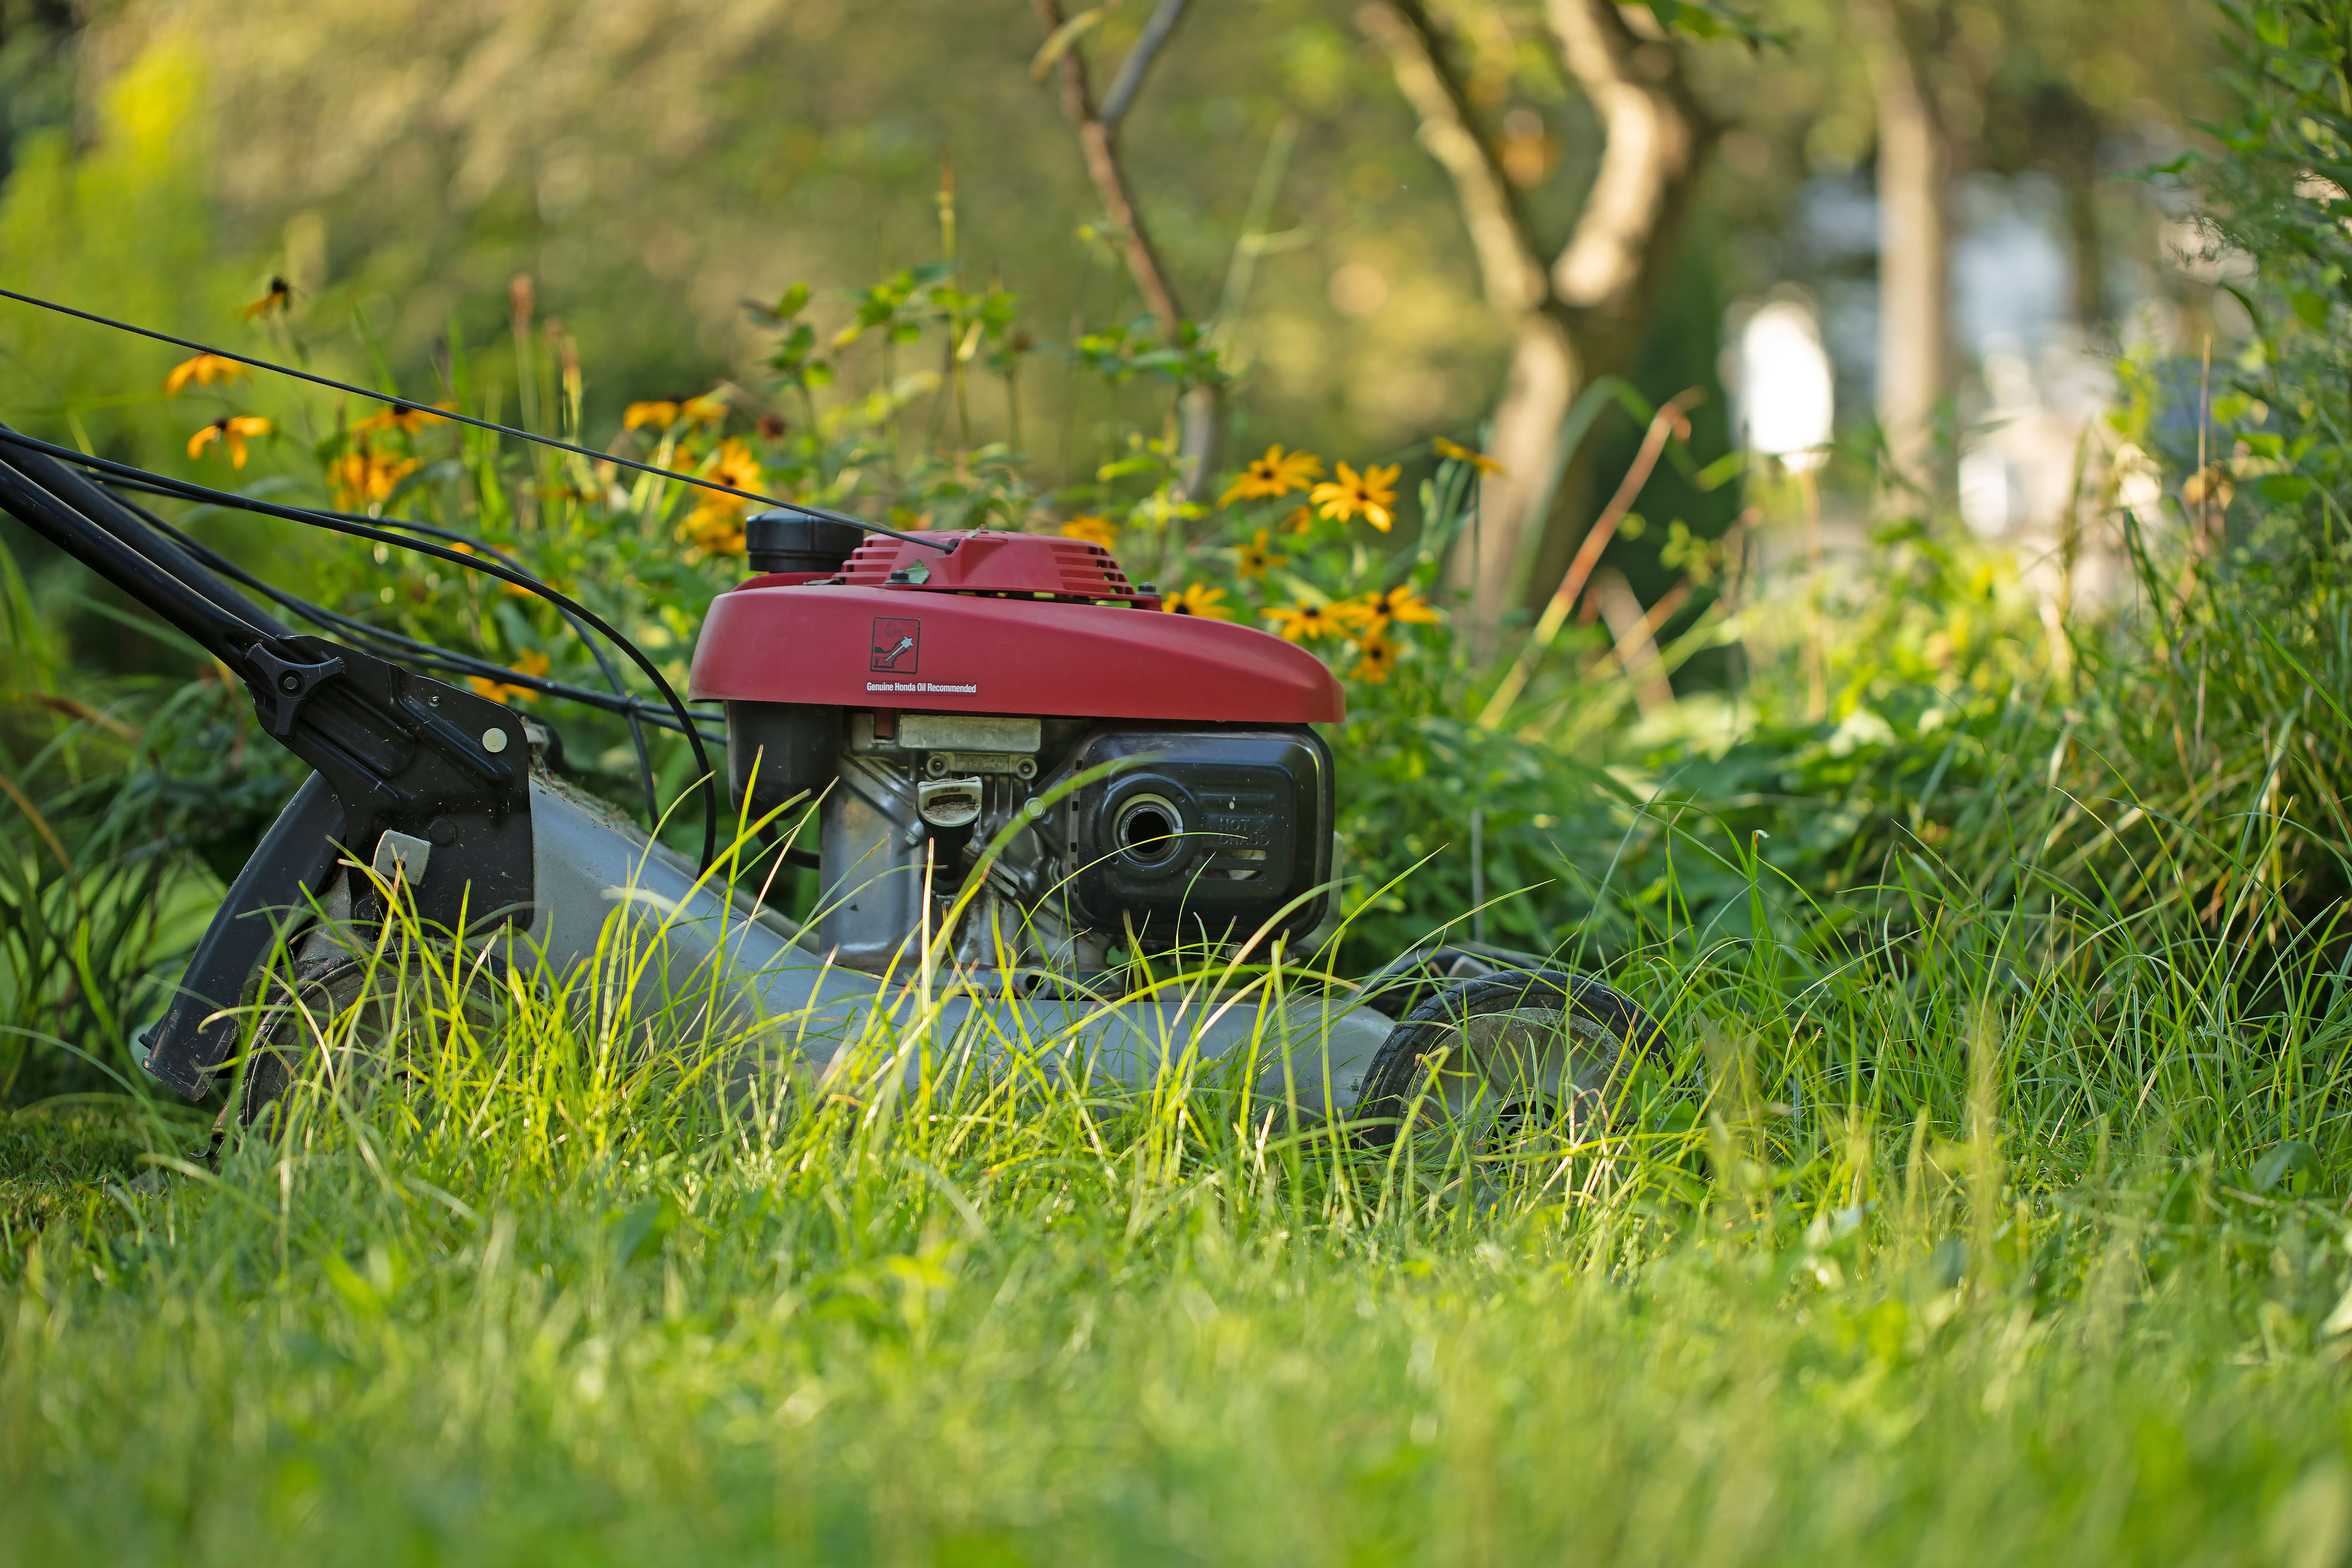 Lawn mower in tall grass.